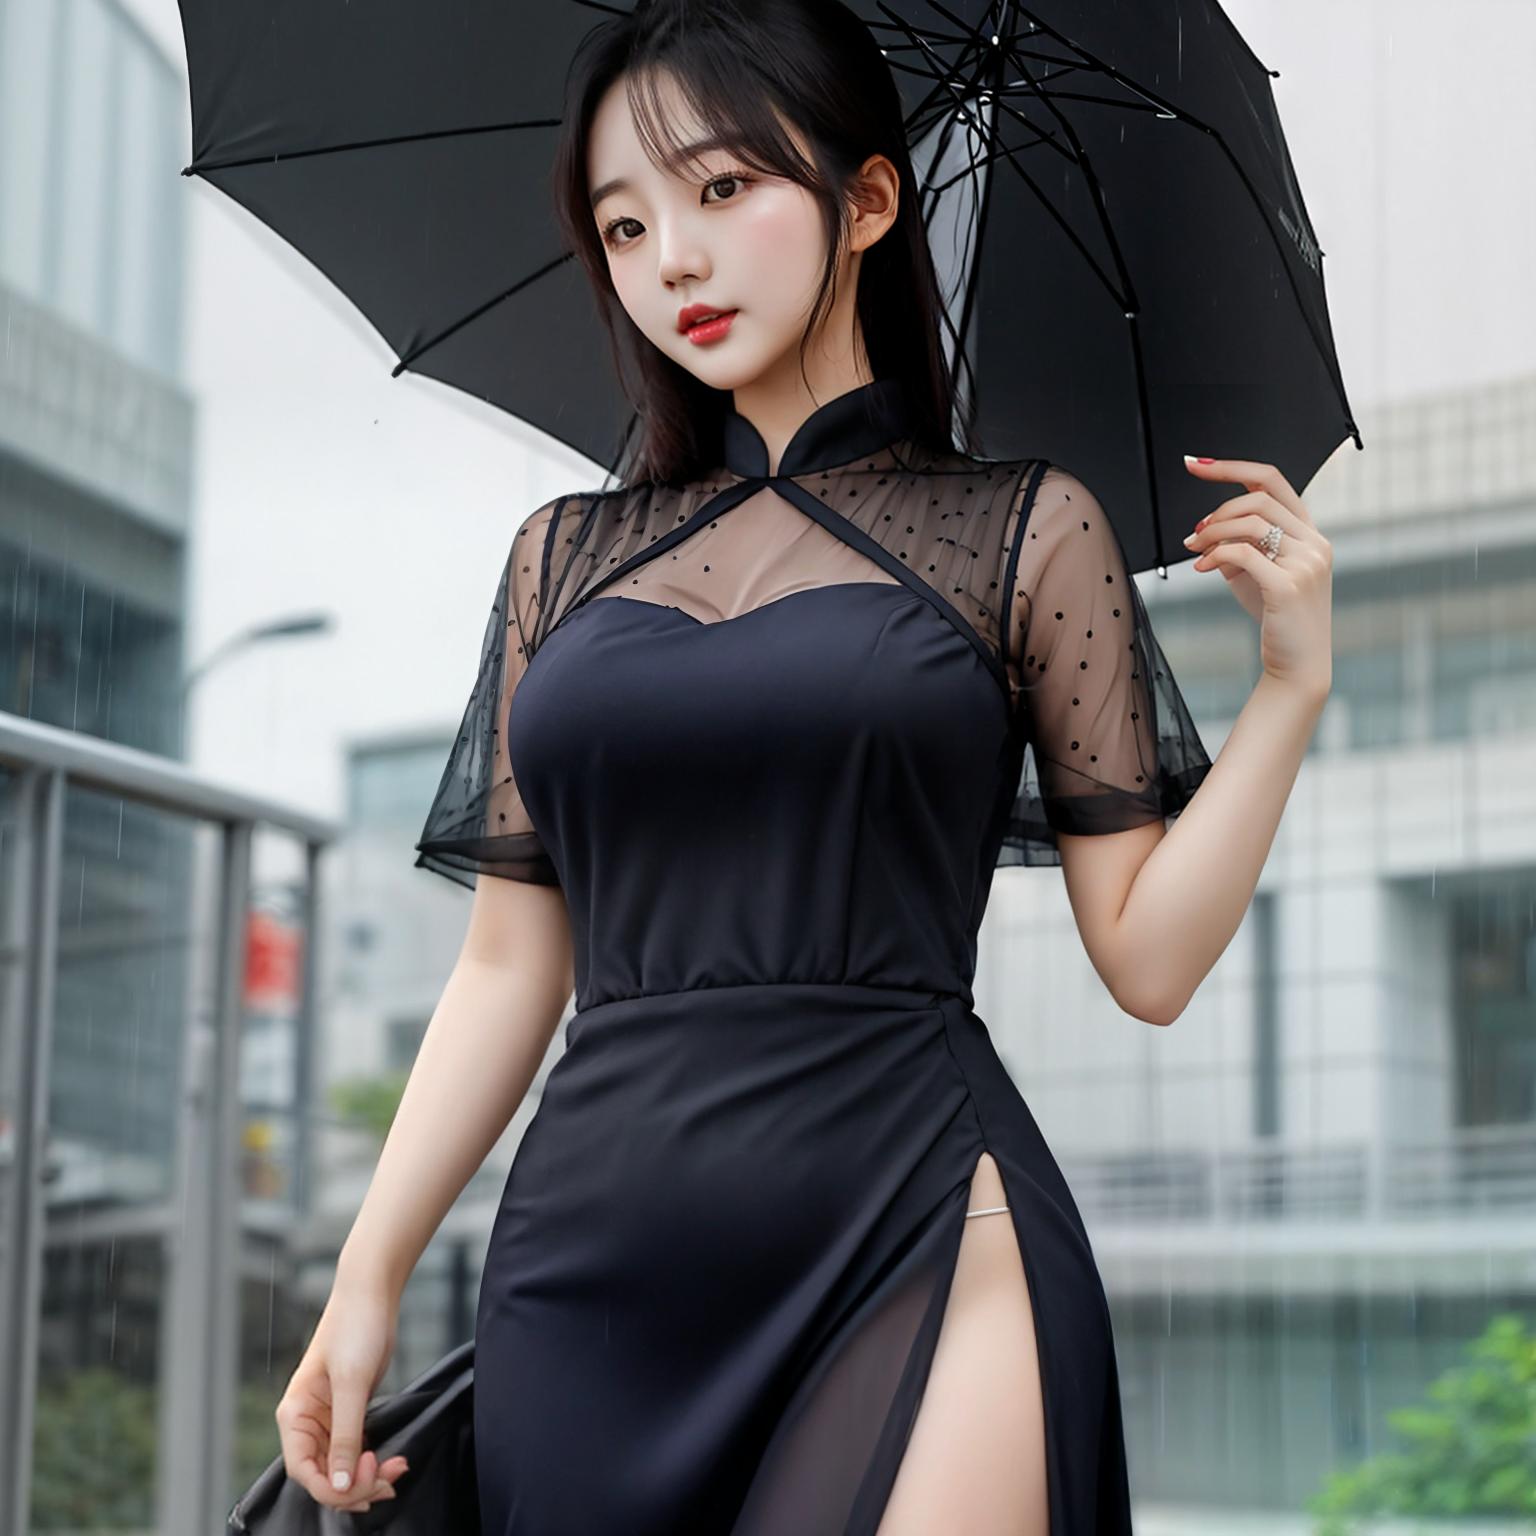  masterpiece, best quality, Korean woman in her 20s, mesh dress, heavy rain,